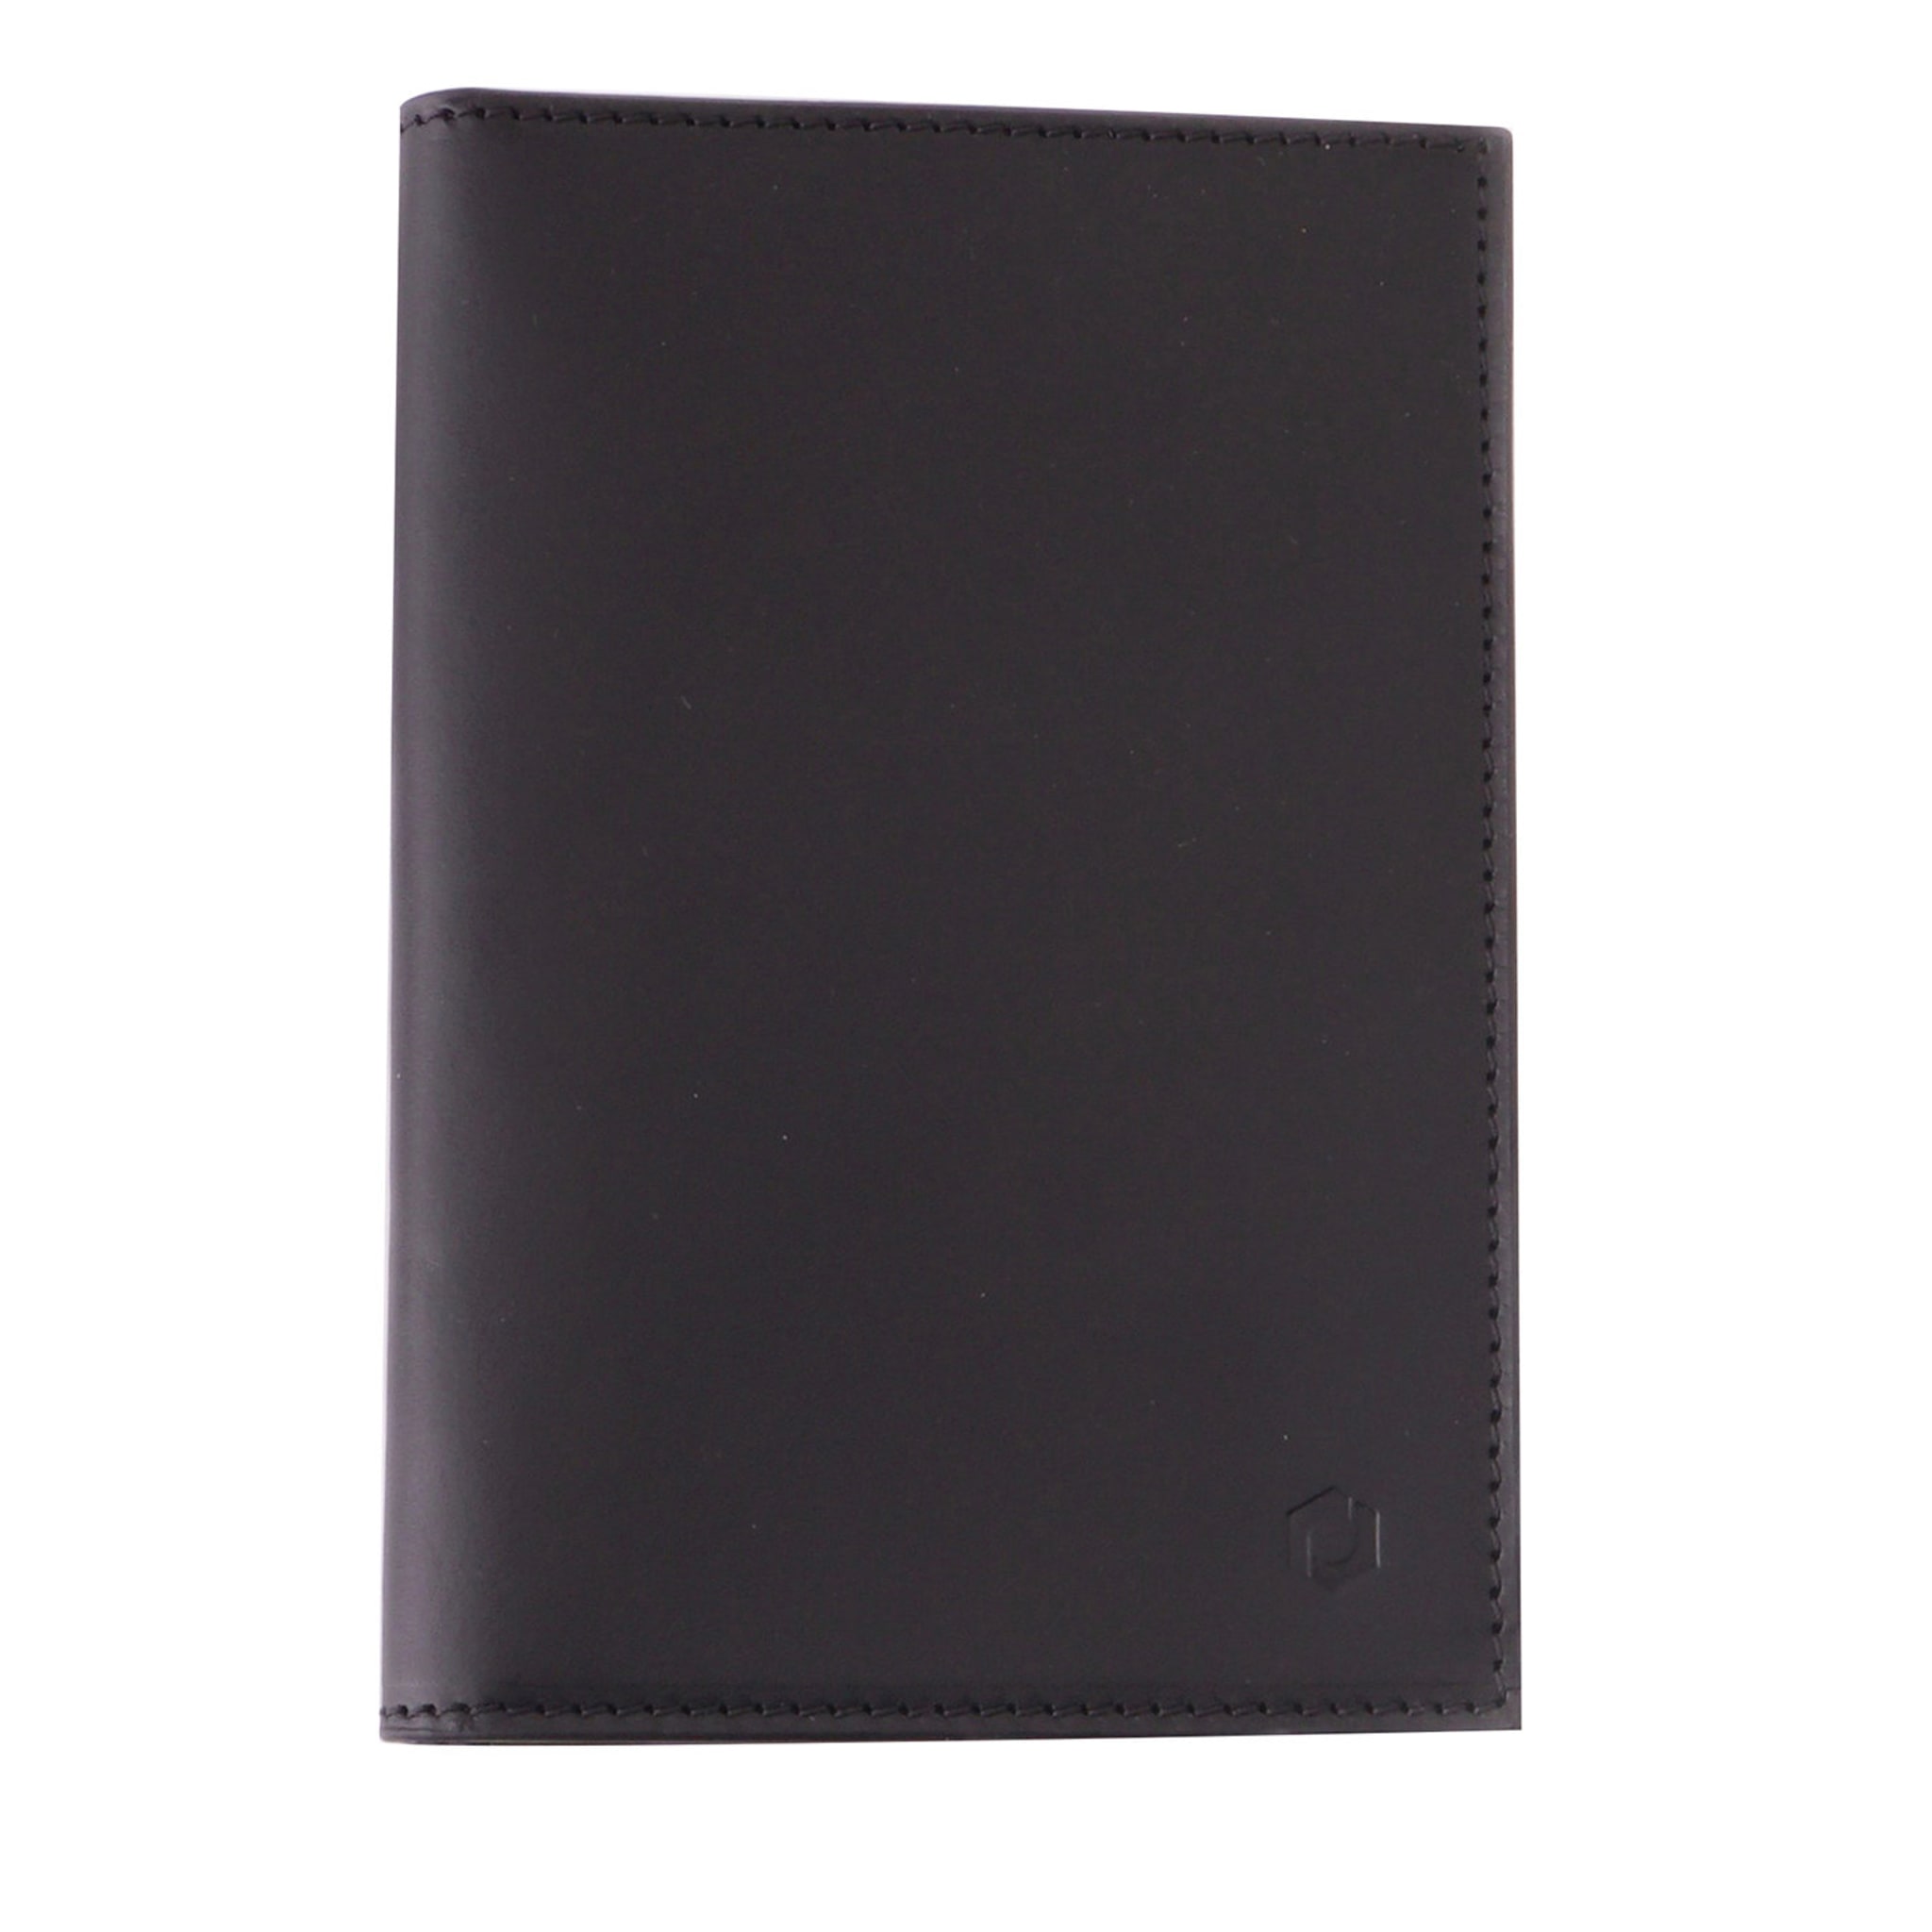 Black Leather Passport Holder - Main view